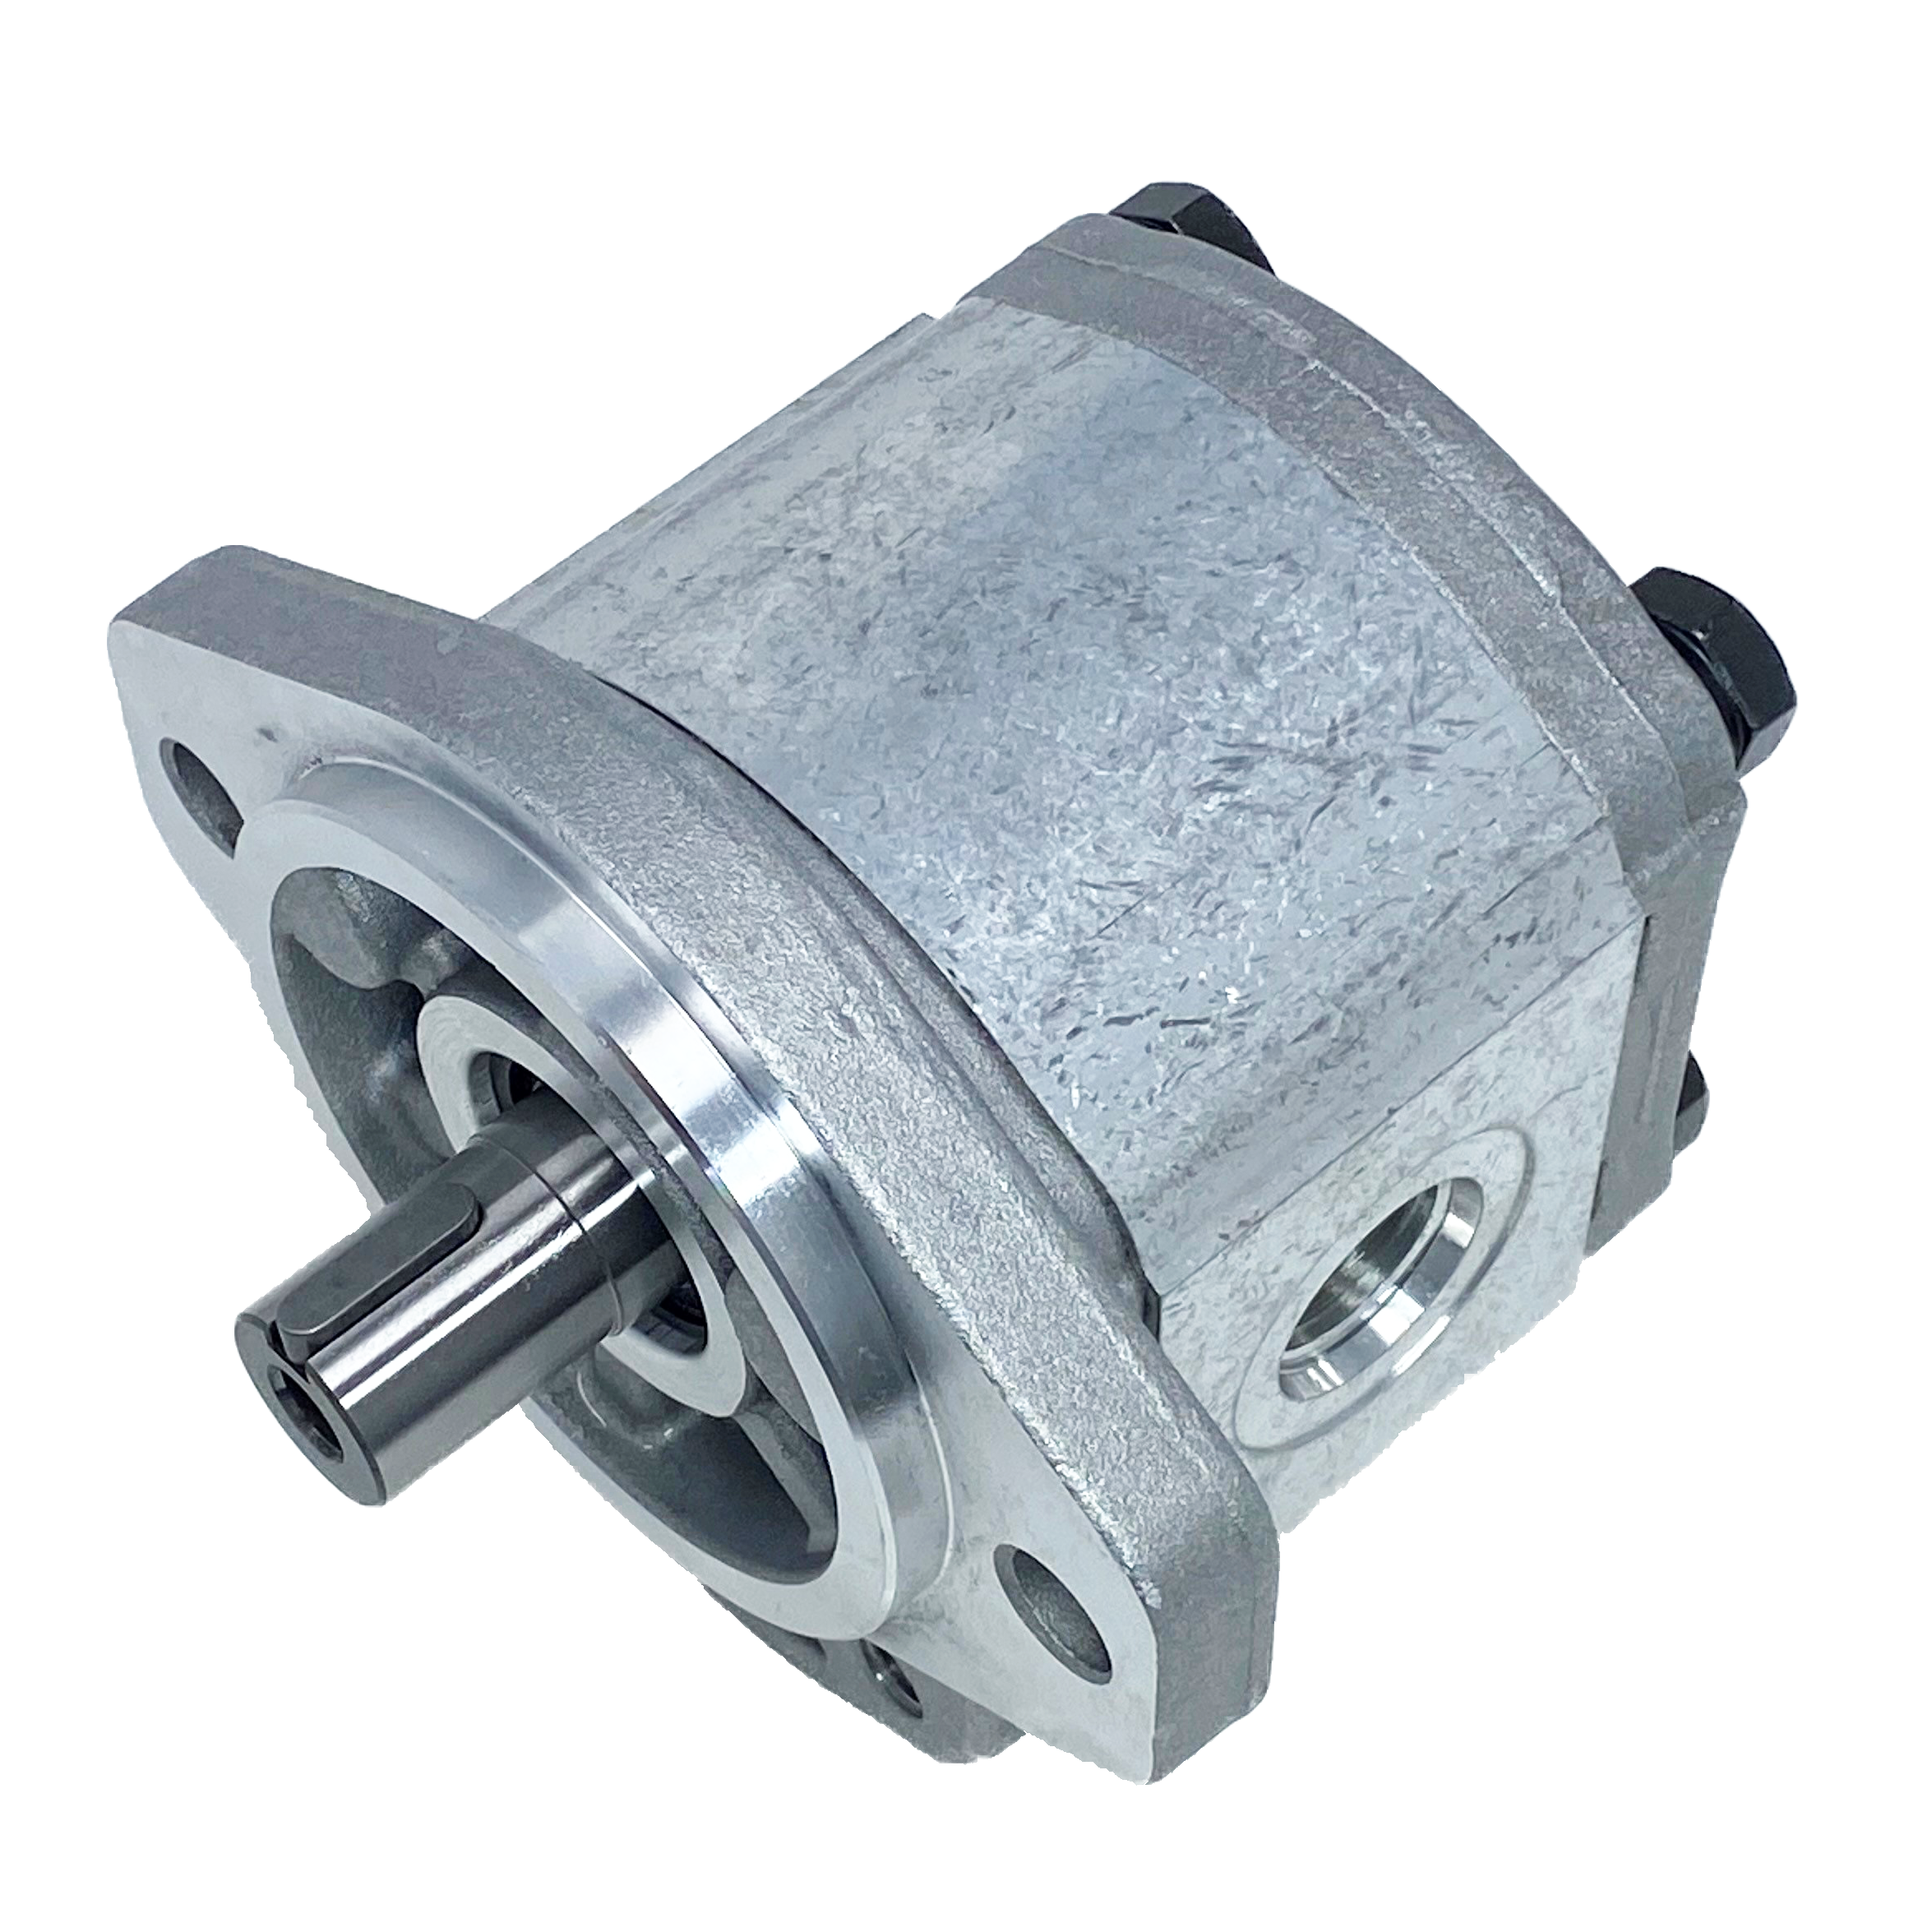 PLM20.11,2B0-50S1-LOC/OC-N-EL : Casappa Polaris Gear Motor, 11.23cc, 3625psi Rated, 3500RPM, Reversible Interior Drain, 3/4" Bore x 3/16" Key Shaft, SAE A 2-Bolt Flange, 0.625 (5/8") #10 SAE Inlet, 0.625 (5/8") #10 SAE Outlet, Aluminum Body & Flange